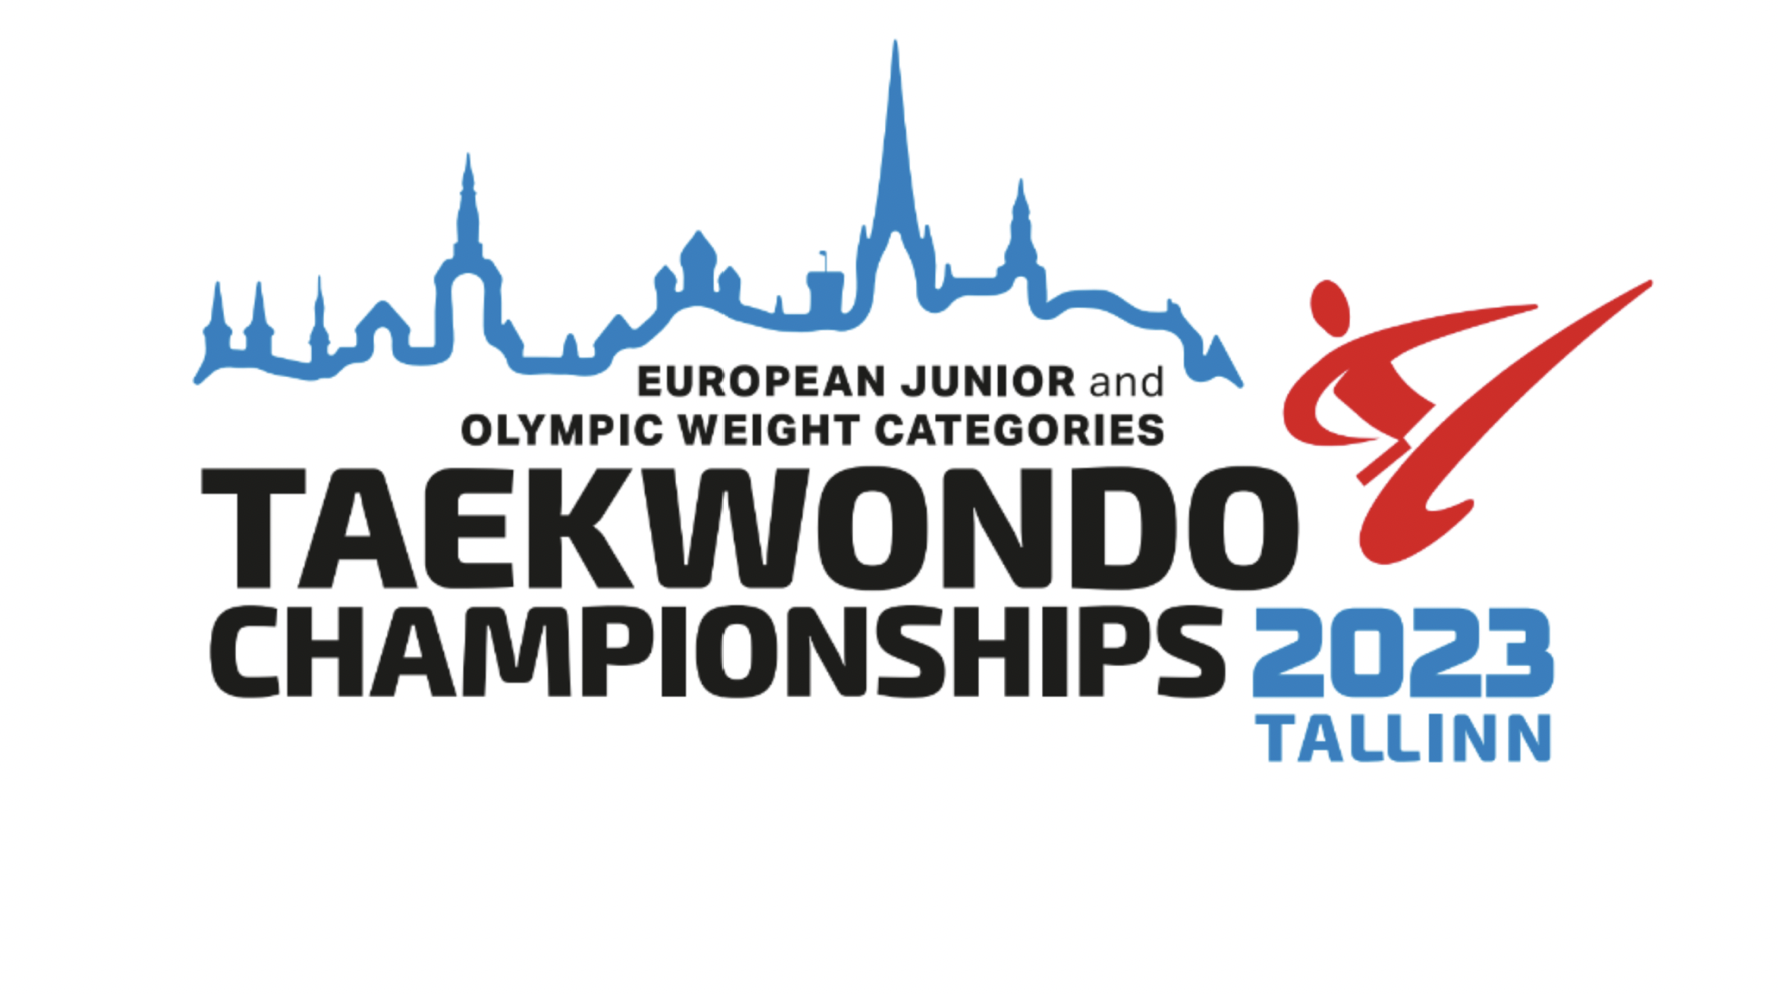 European Junior Taekwondo Championships 2023 in Tallinn, Estonia